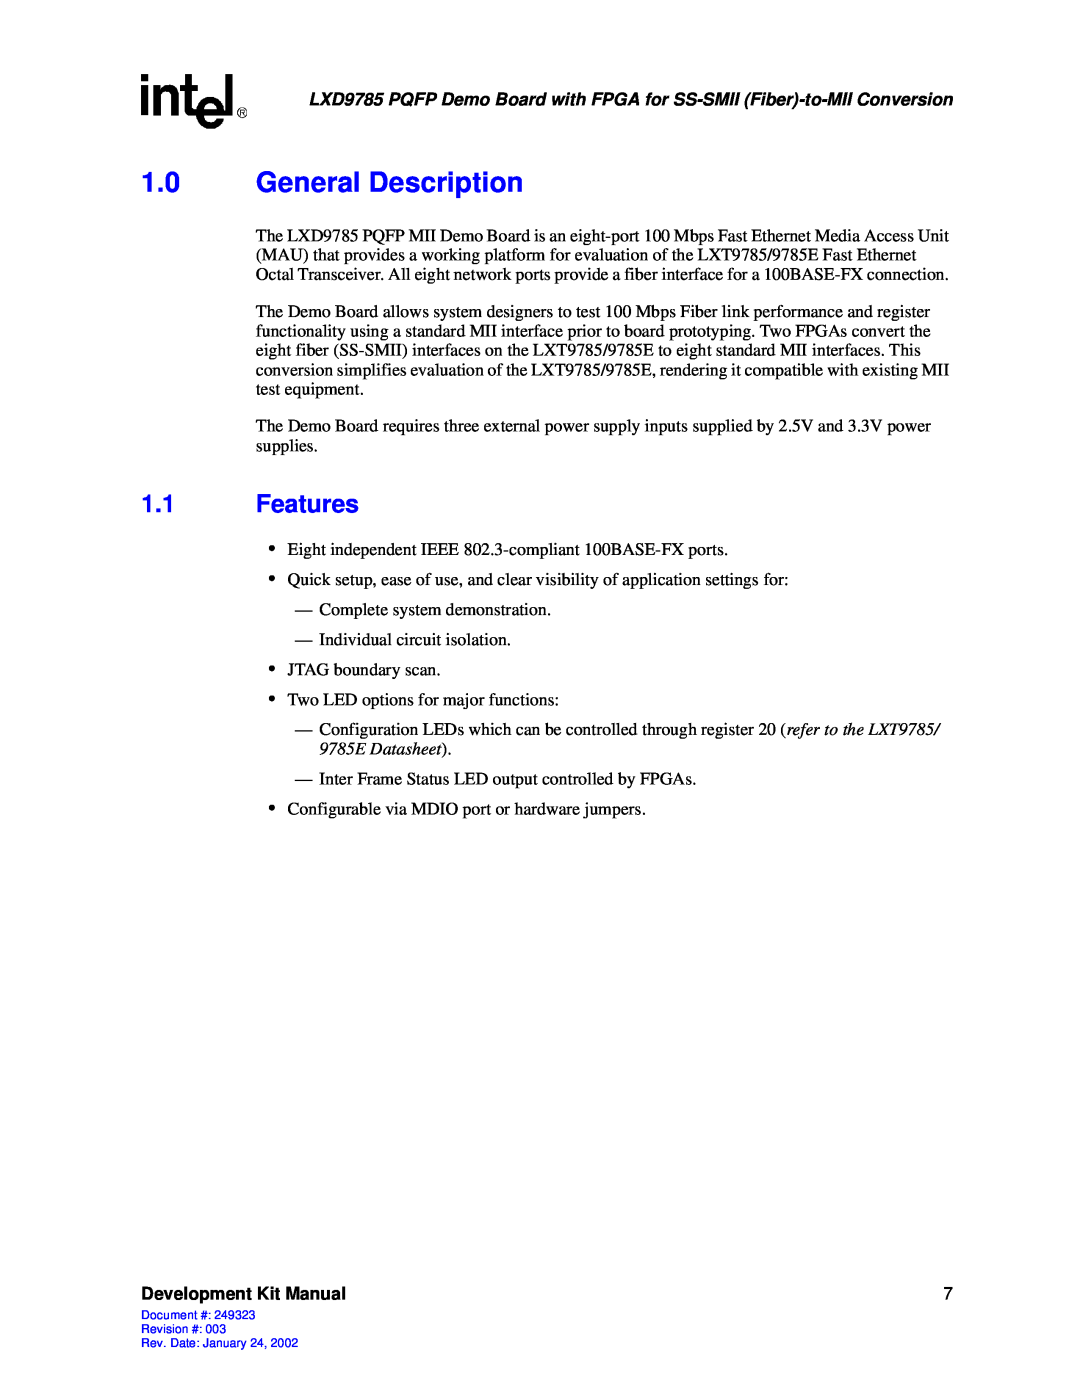 Intel Demo Board with FPGA for SS-SMII (Fiber)-to-MII Conversion General Description, Features, Development Kit Manual 